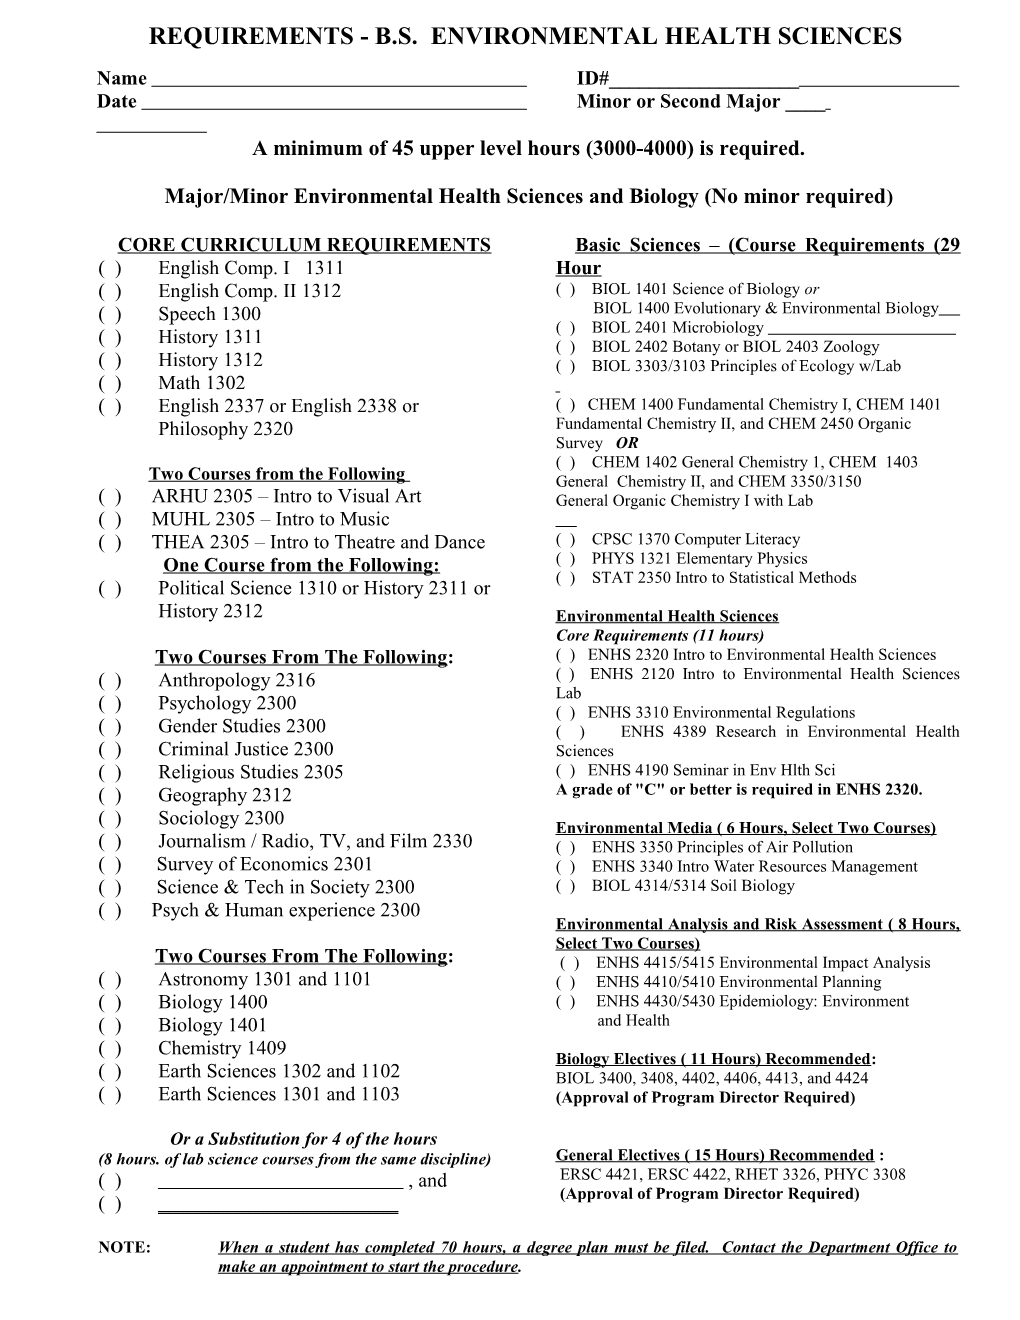 REQUIREMENTS - B.S. Environmental Health Sciences